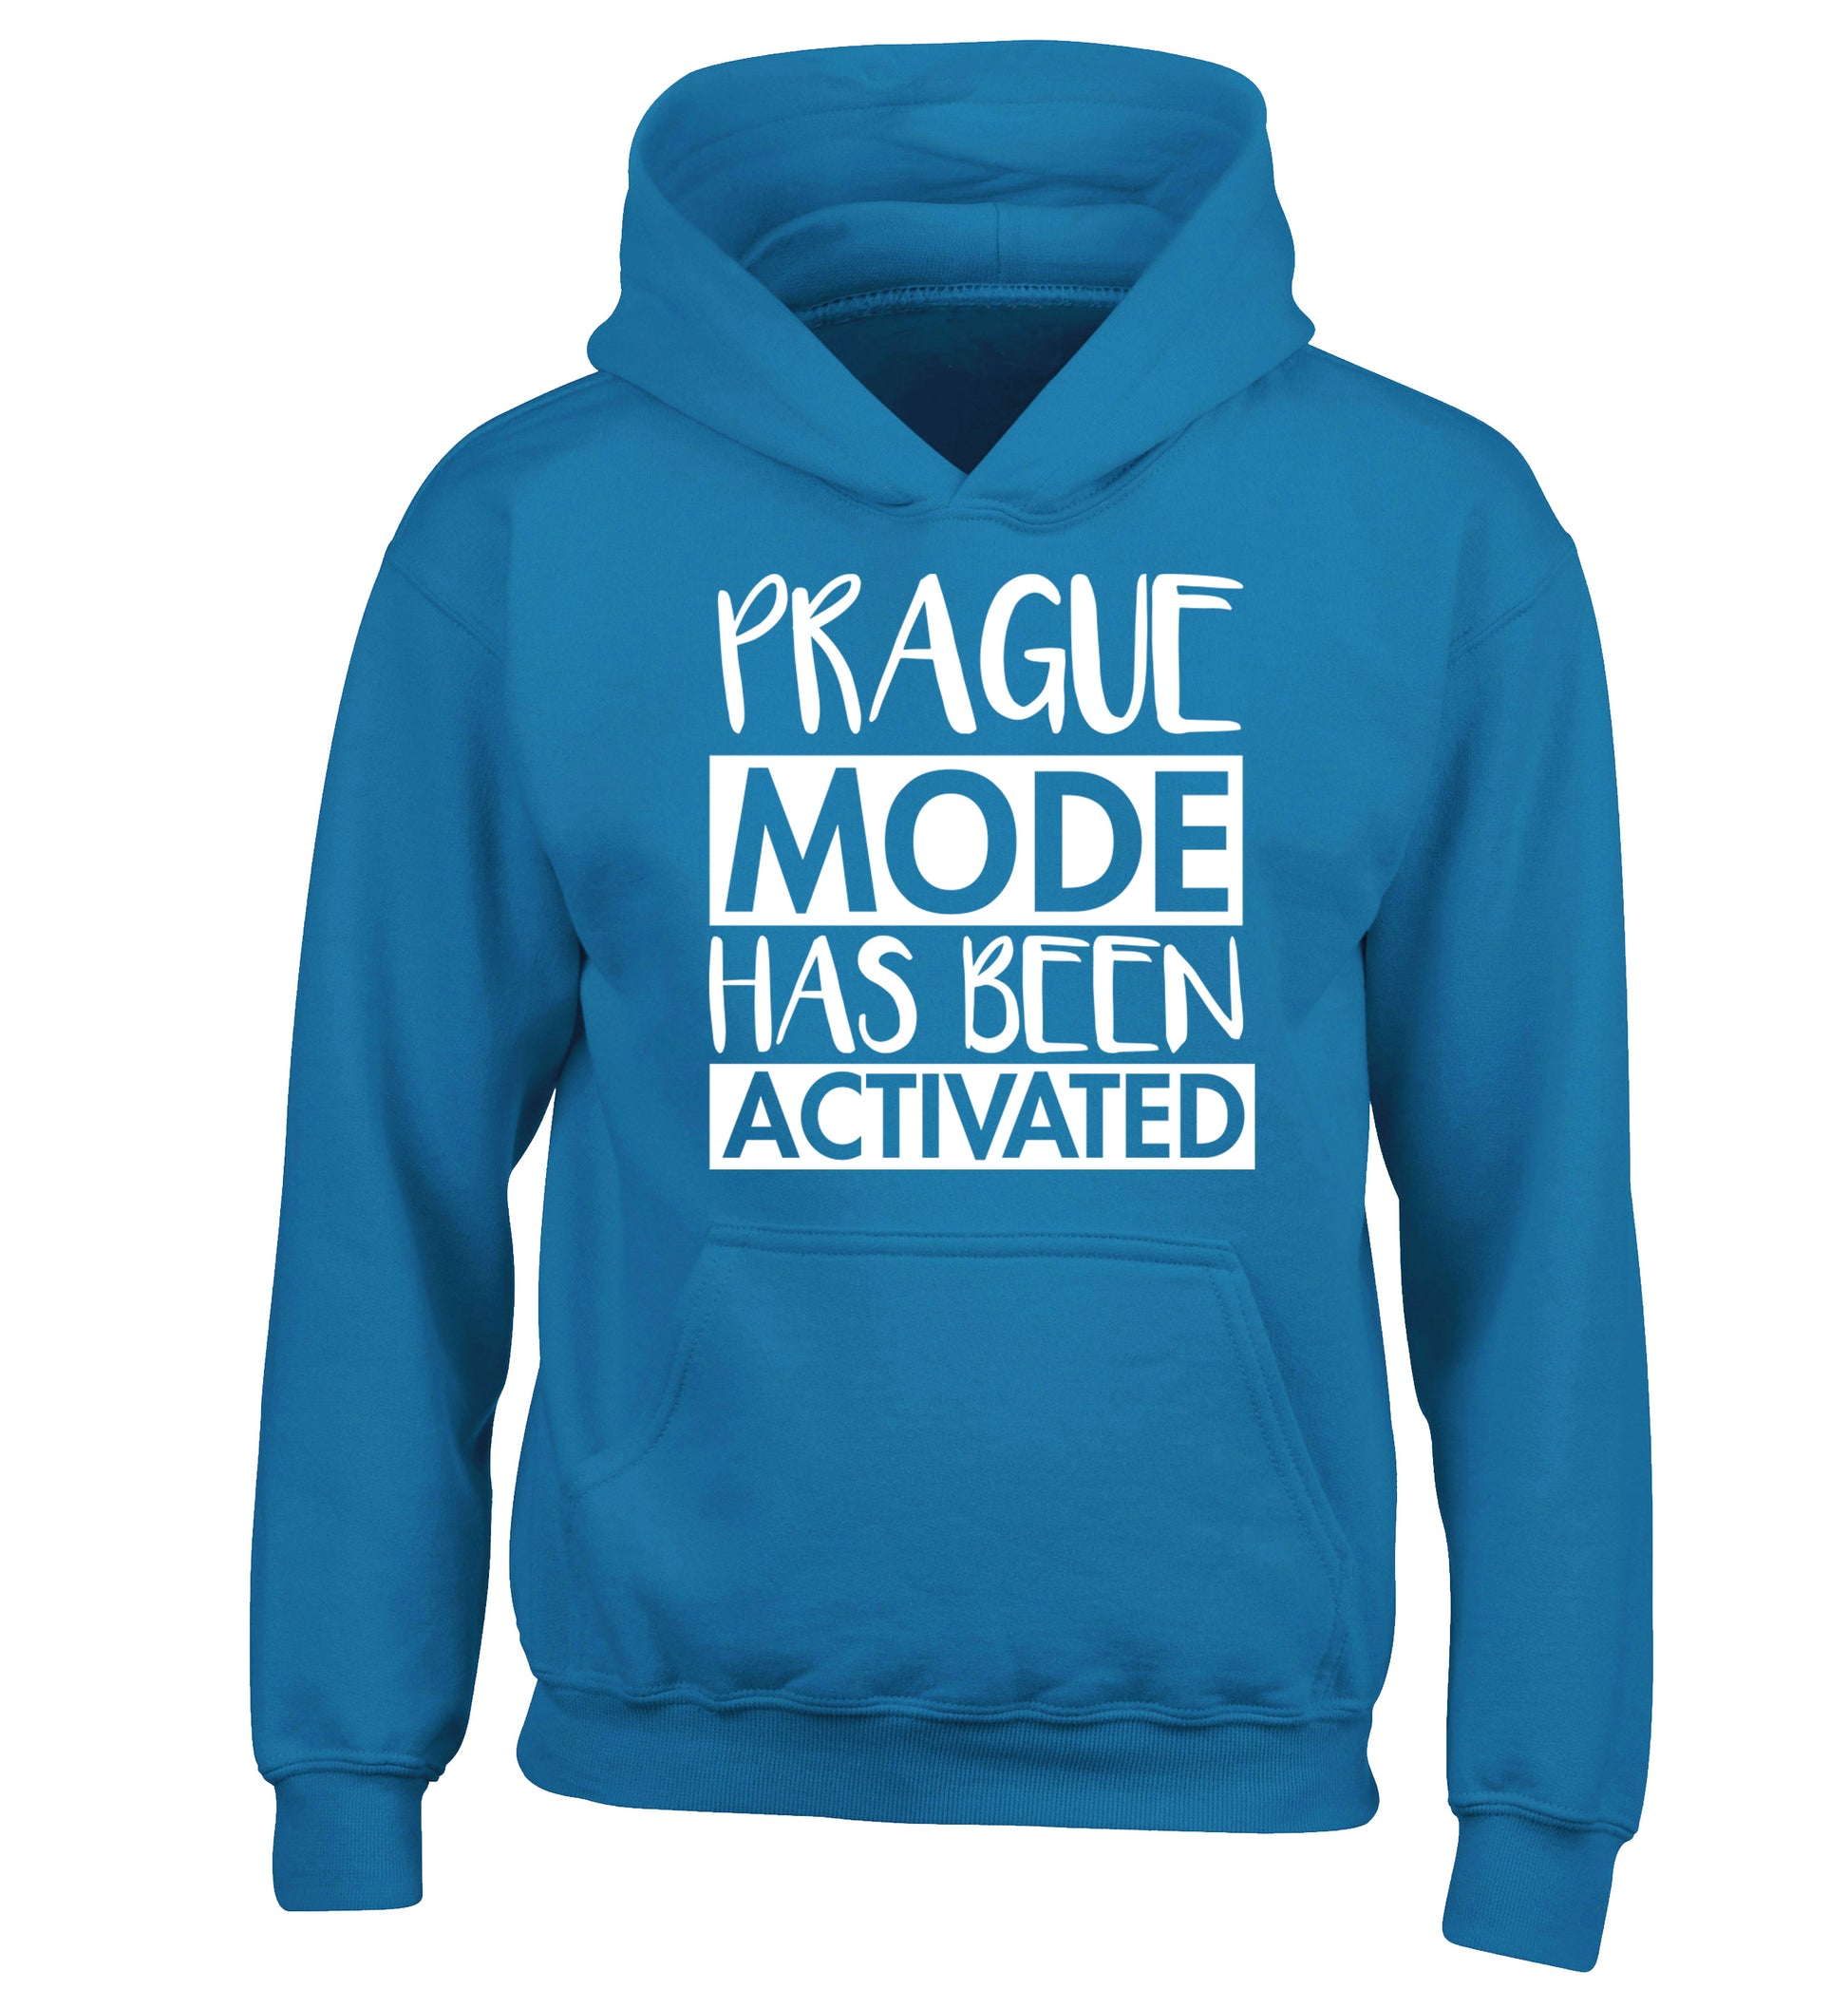 Prague mode has been activated children's blue hoodie 12-13 Years